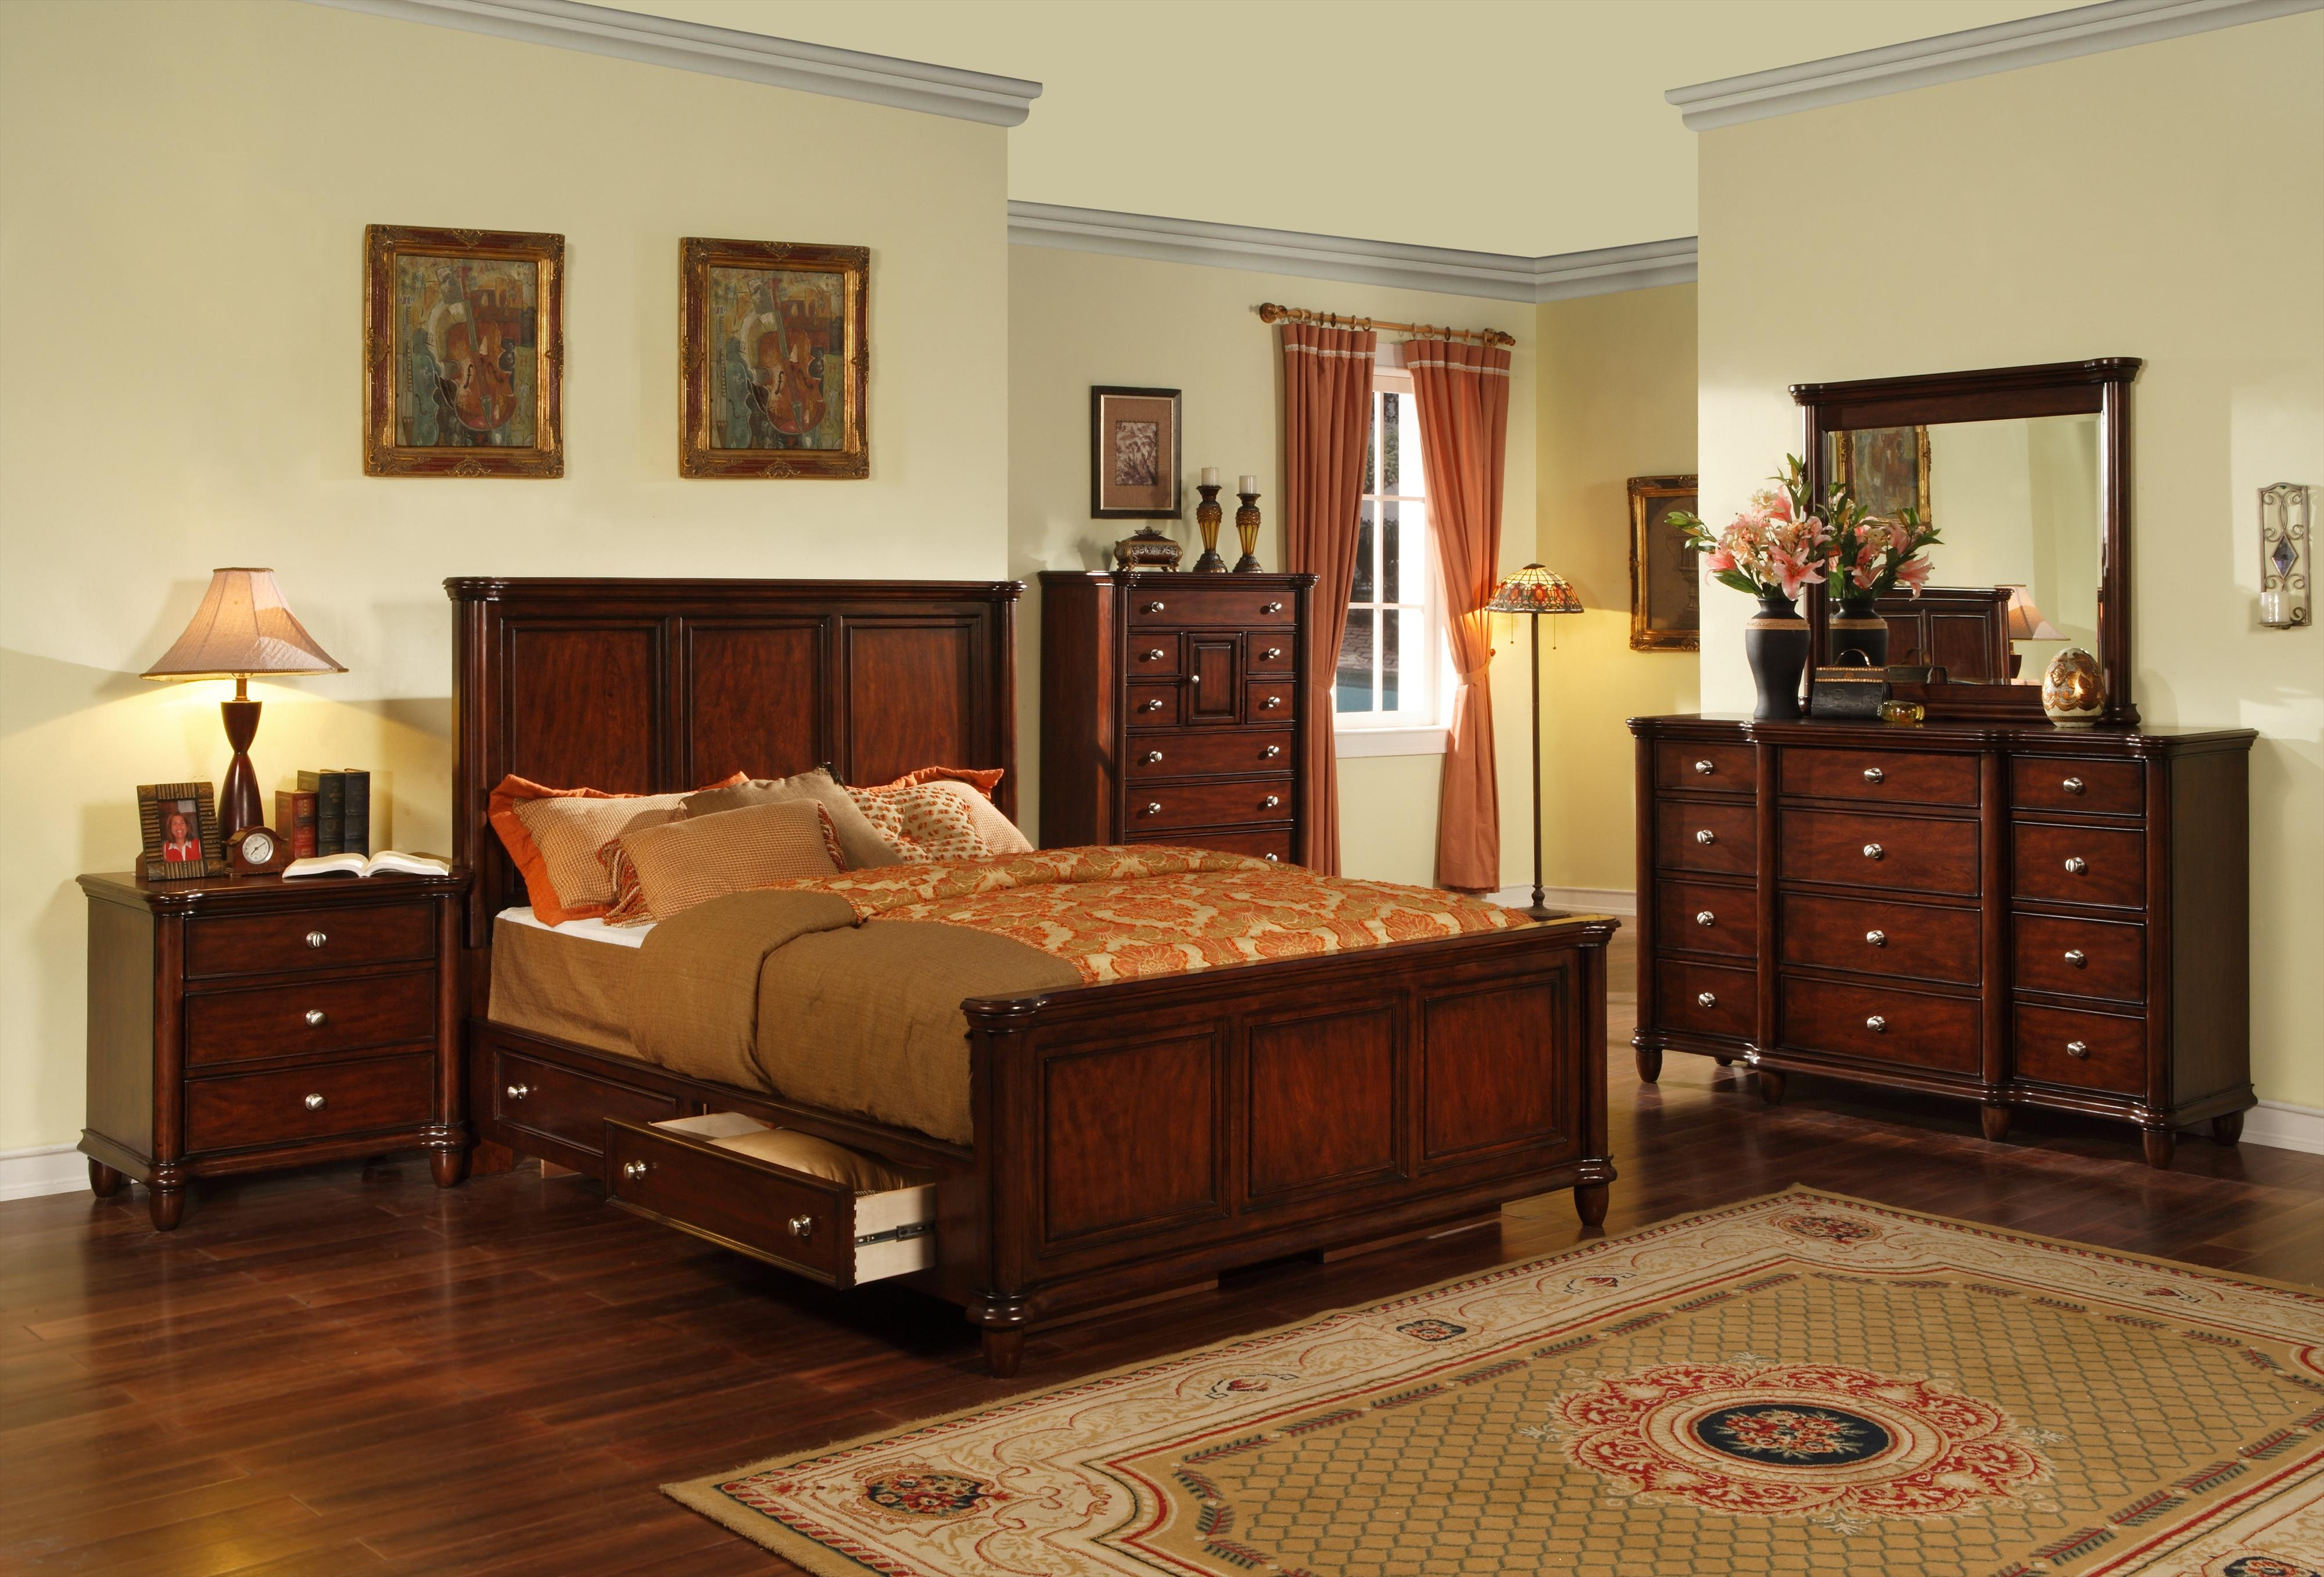 The Brick Bedroom Furniture Calistoga Hamilton Hm100 Elements pertaining to size 4000 X 2714